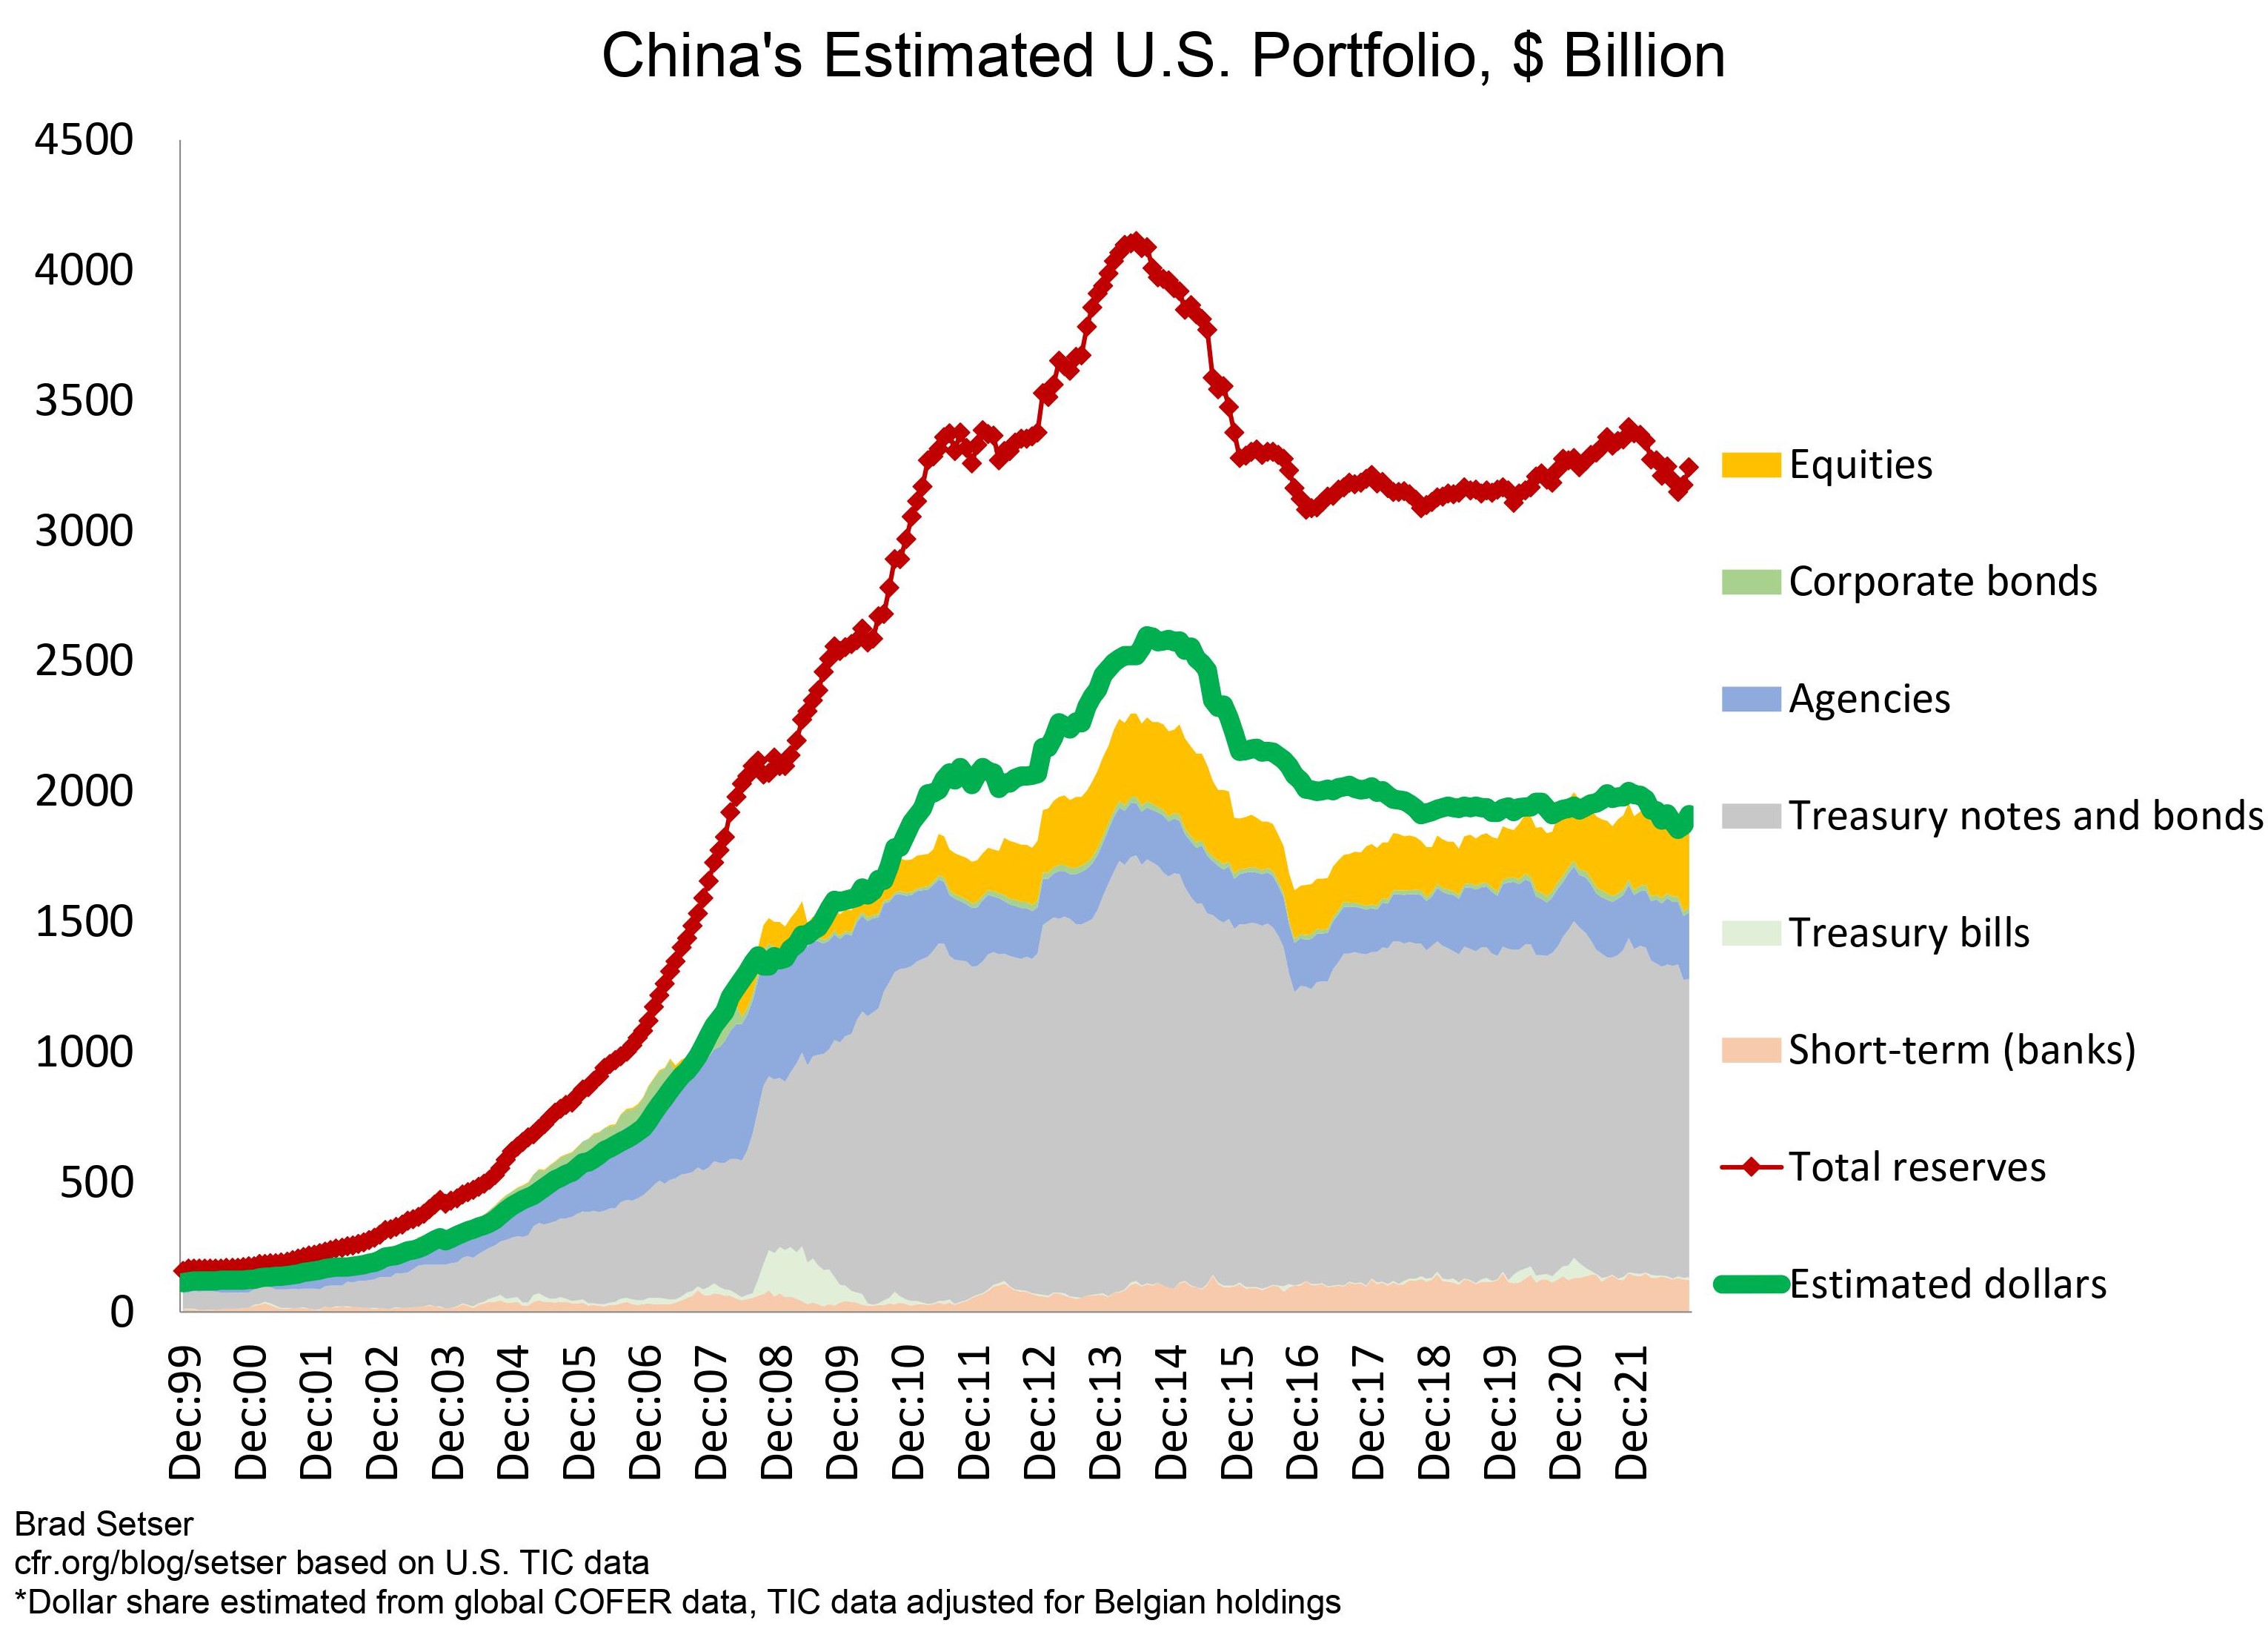 China's Rising Holdings of U.S. Agency Bonds